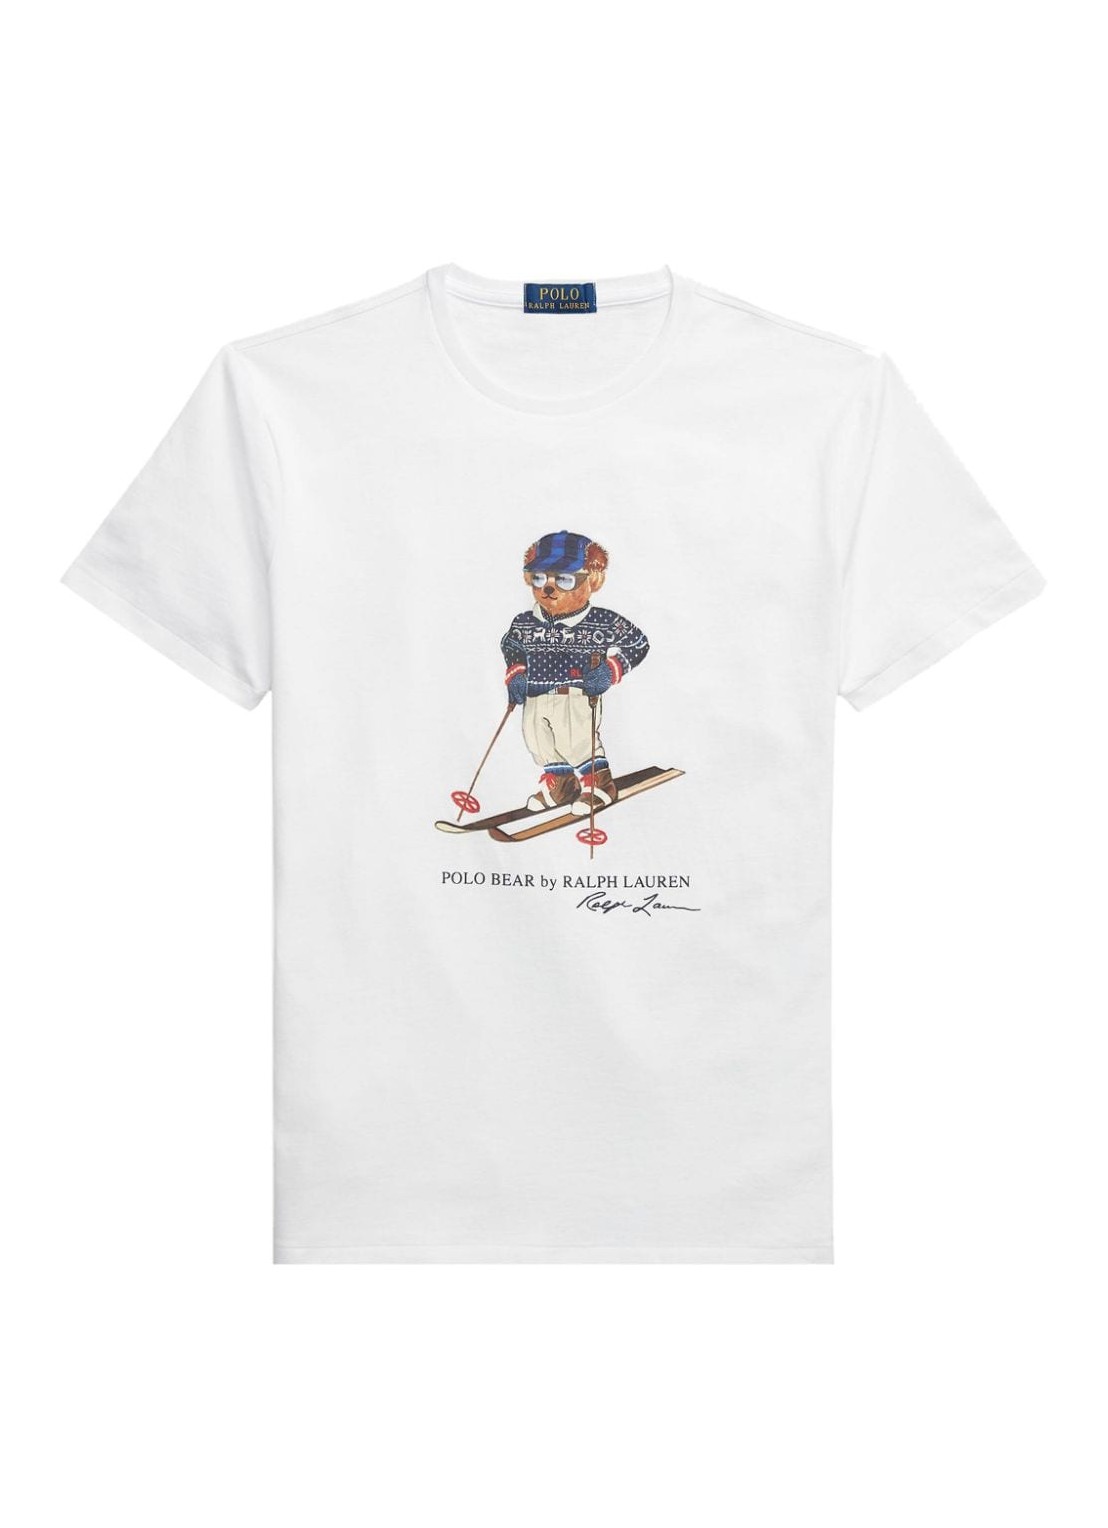 Camiseta polo ralph lauren t-shirt man sscncmslm1-short sleeve-t-shirt 710853310026 cr23 white ski b